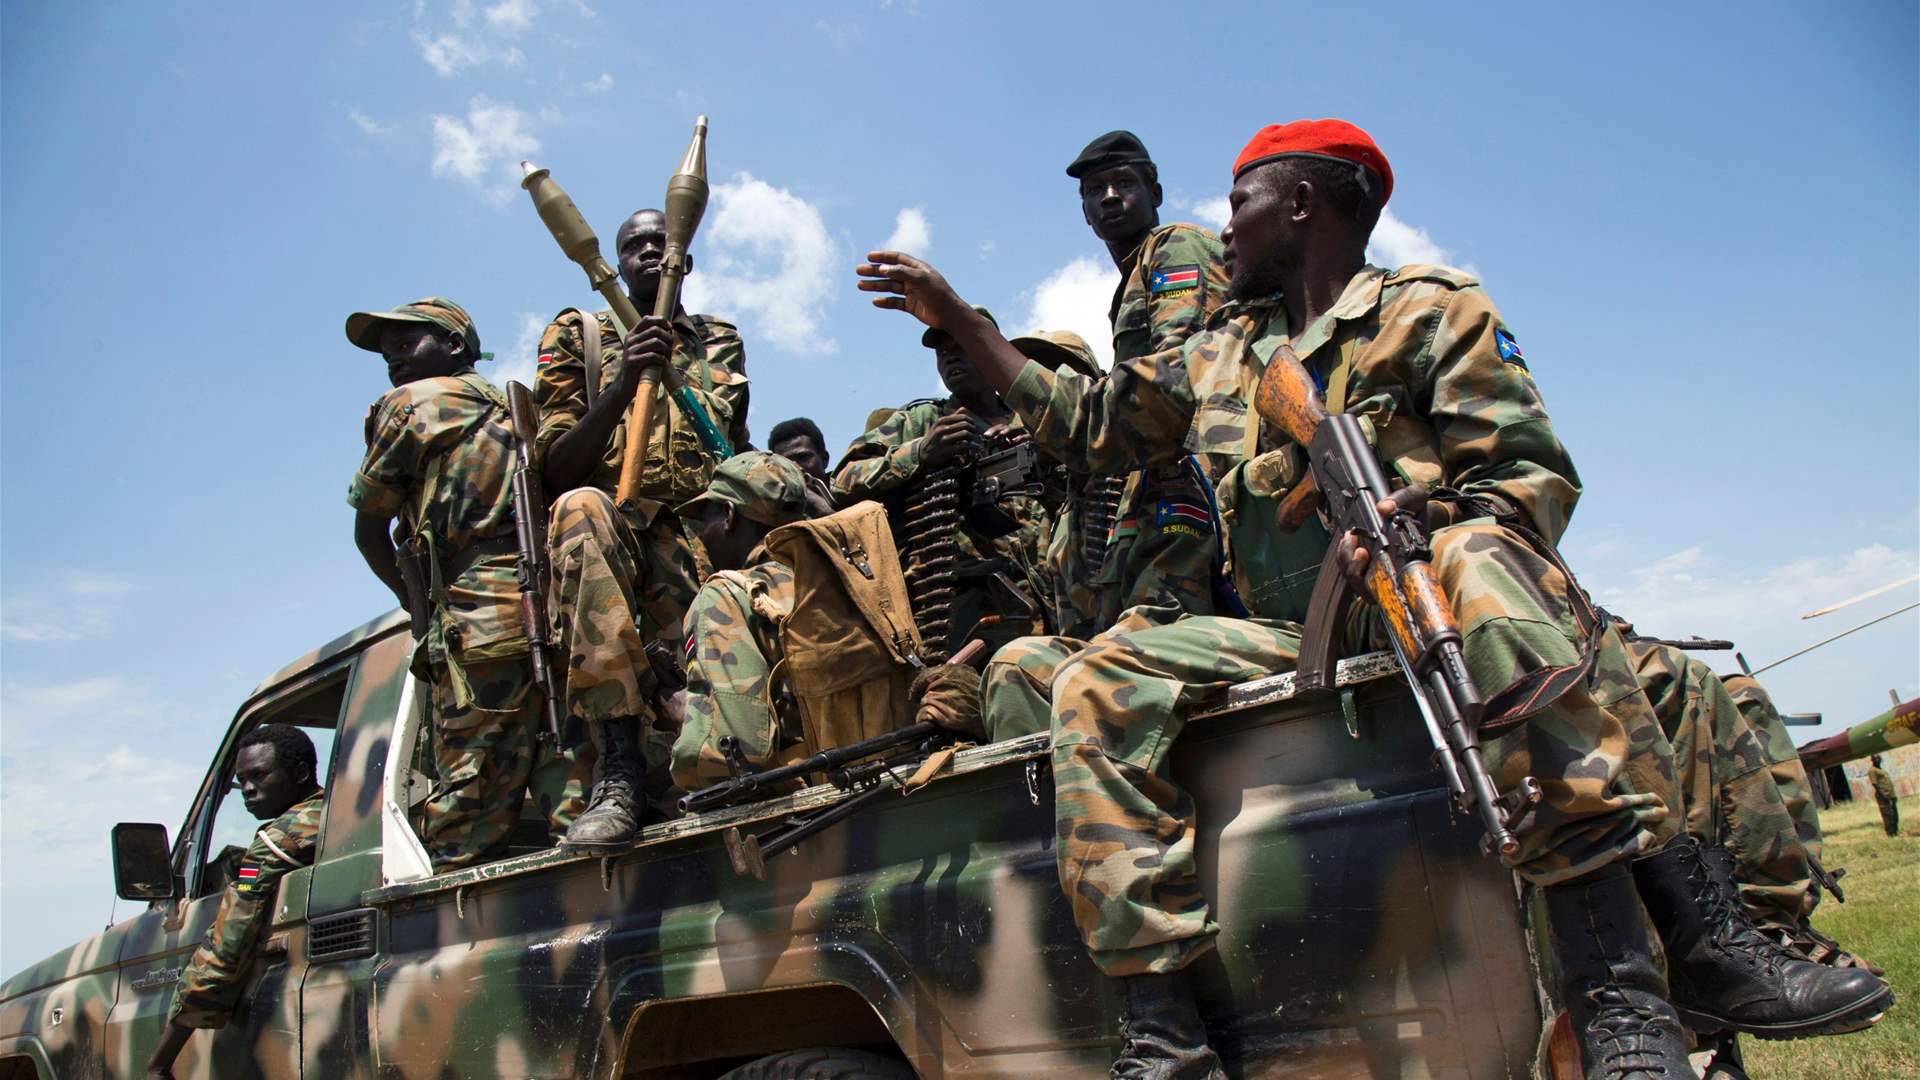 Revenge attack in South Sudan following cattle raid leaves 17 dead